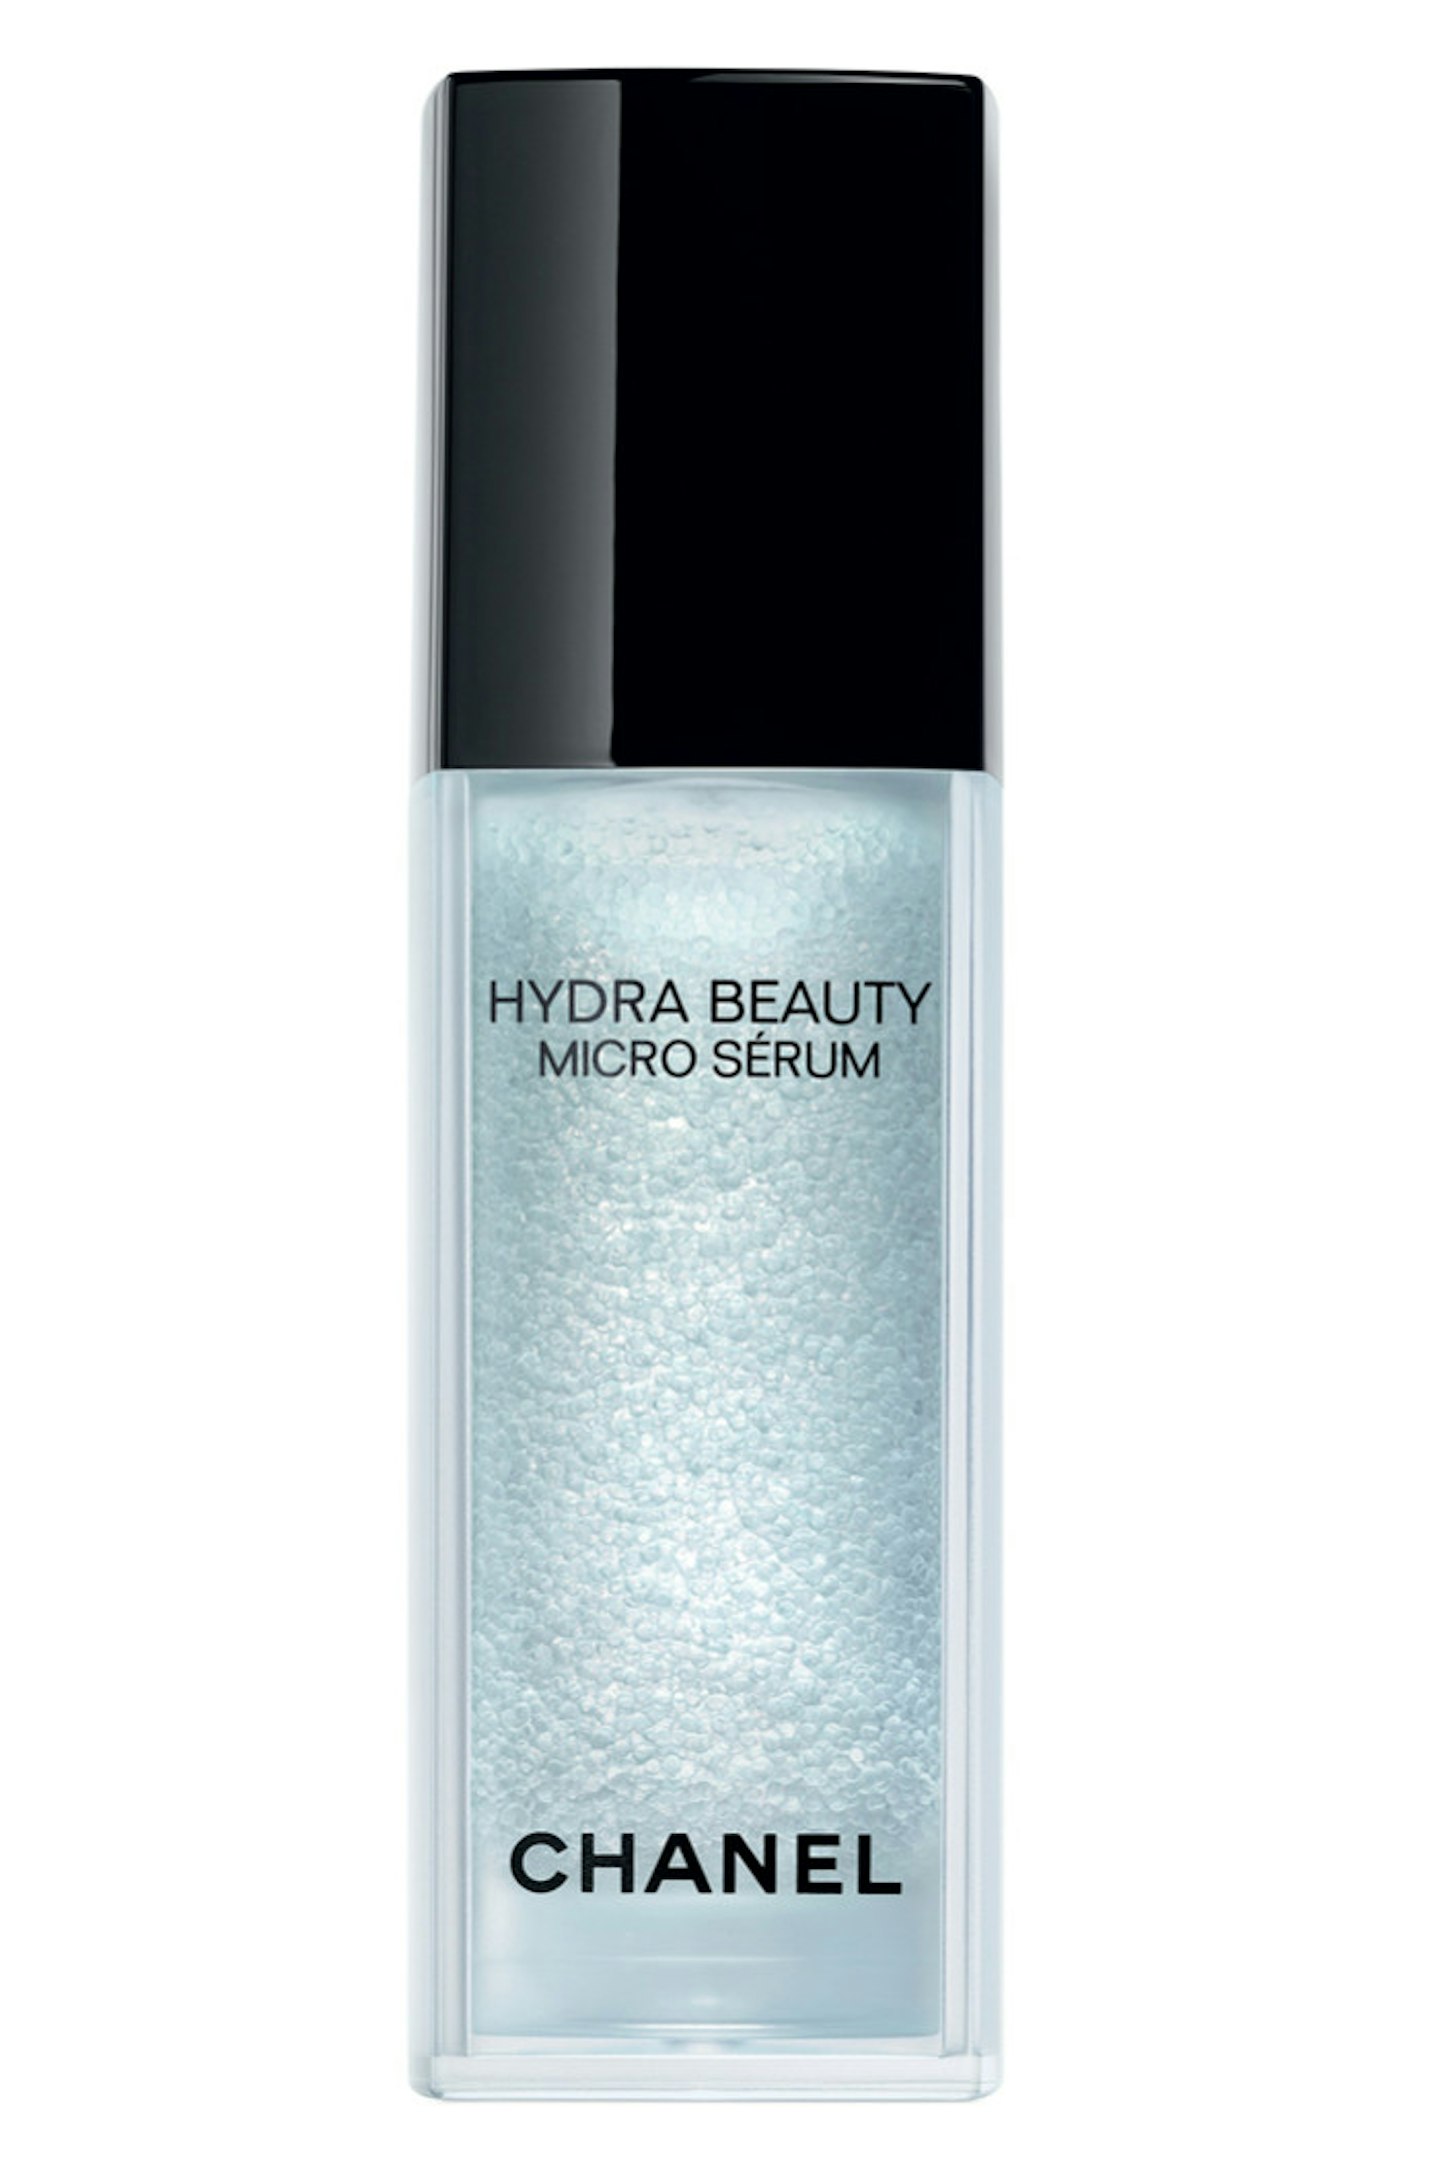 Chanel Hydra Beauty Micro Serum, £66.00